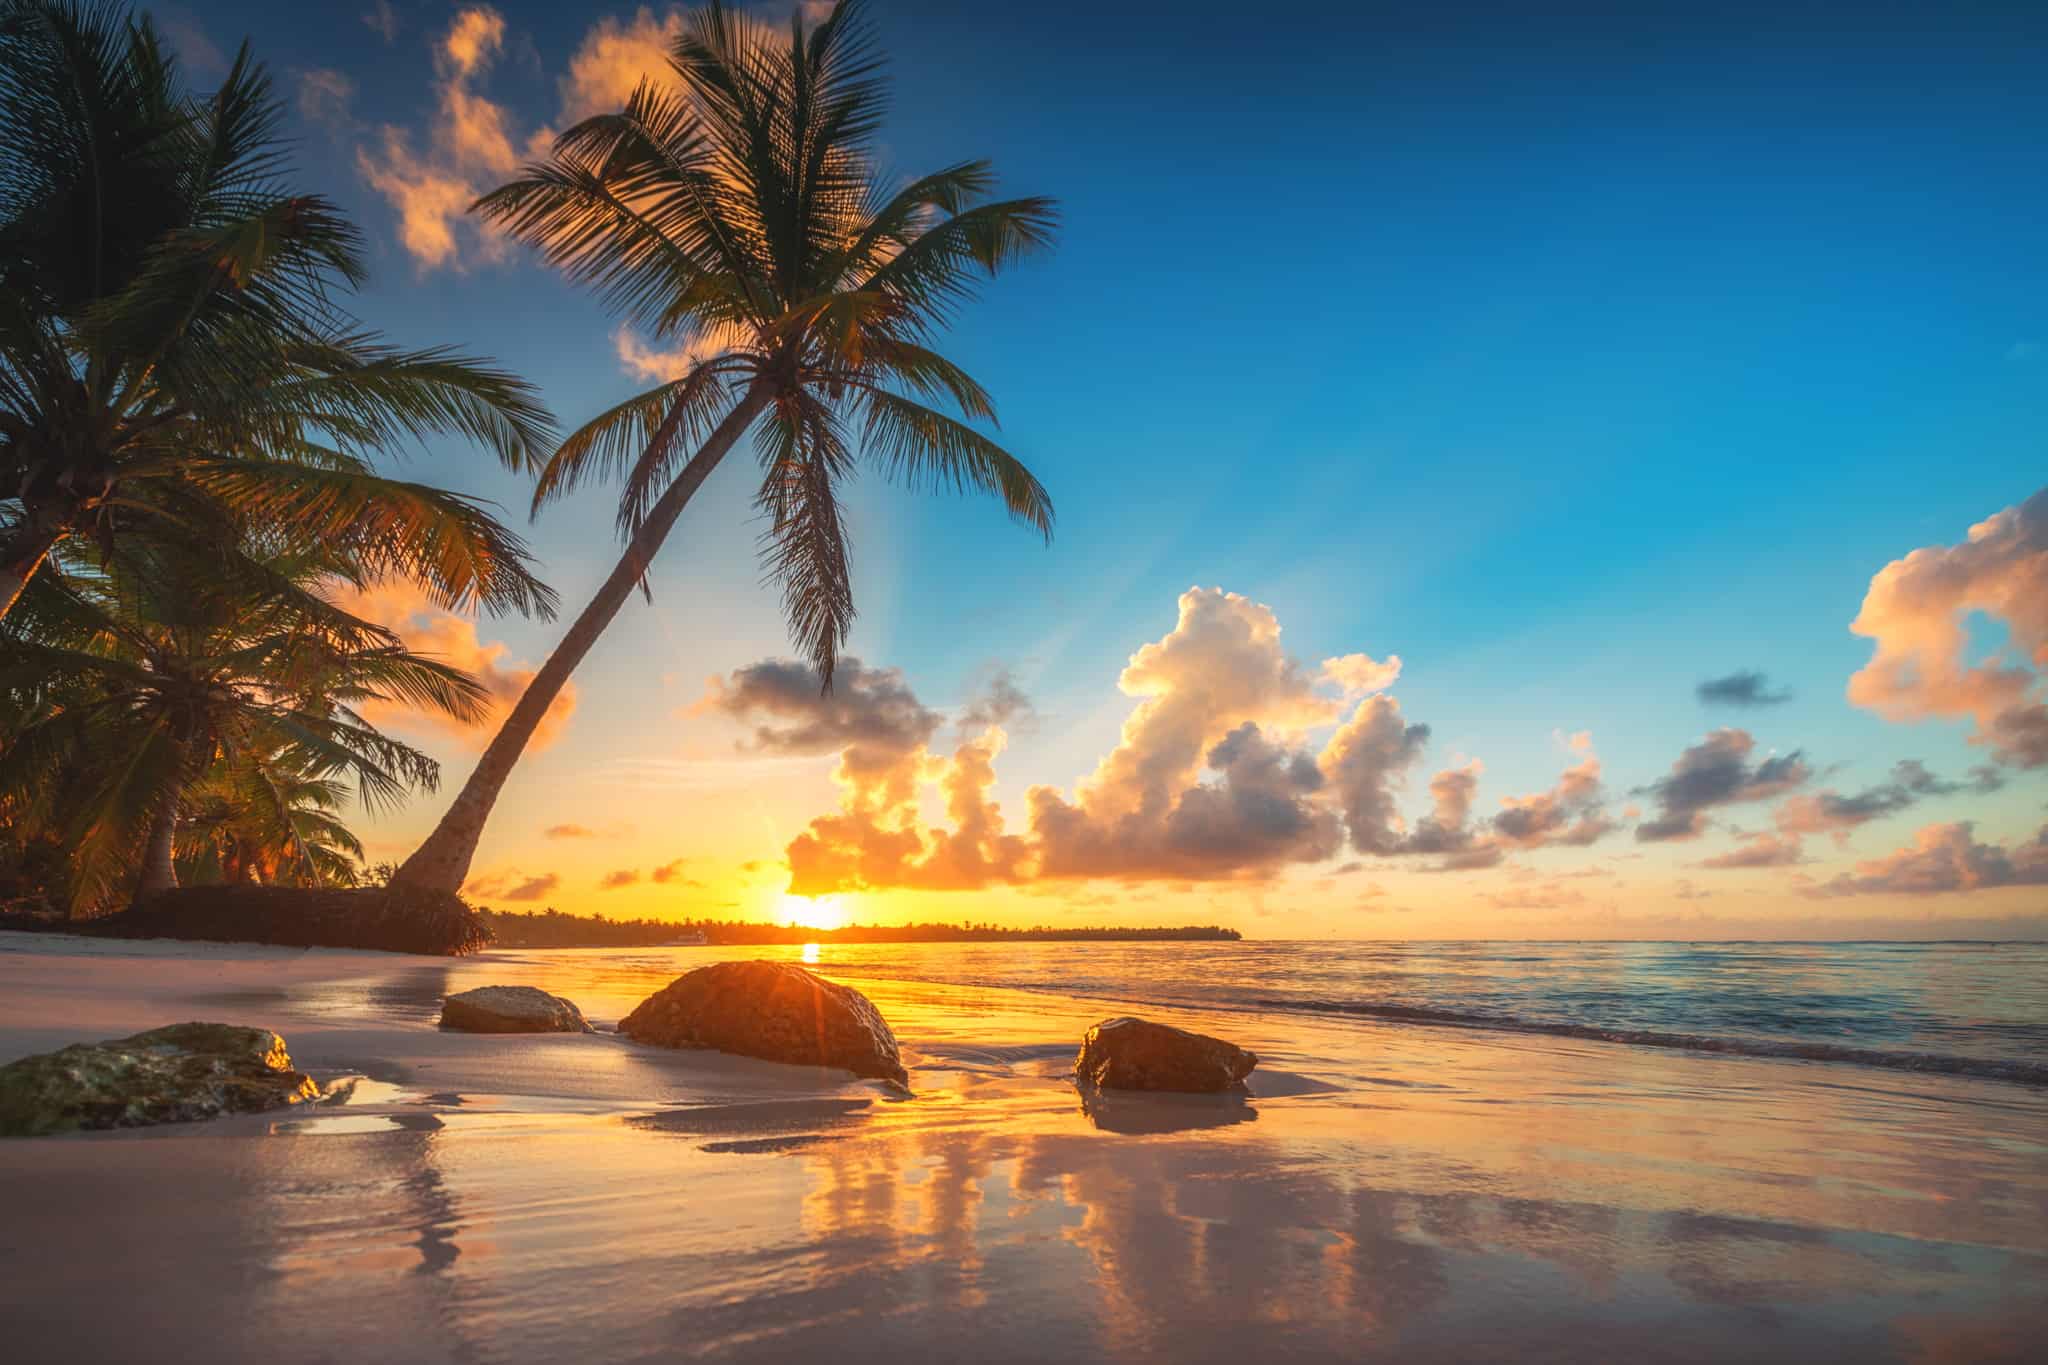 Bright sunrise at tropical beach in the Dominican Republic